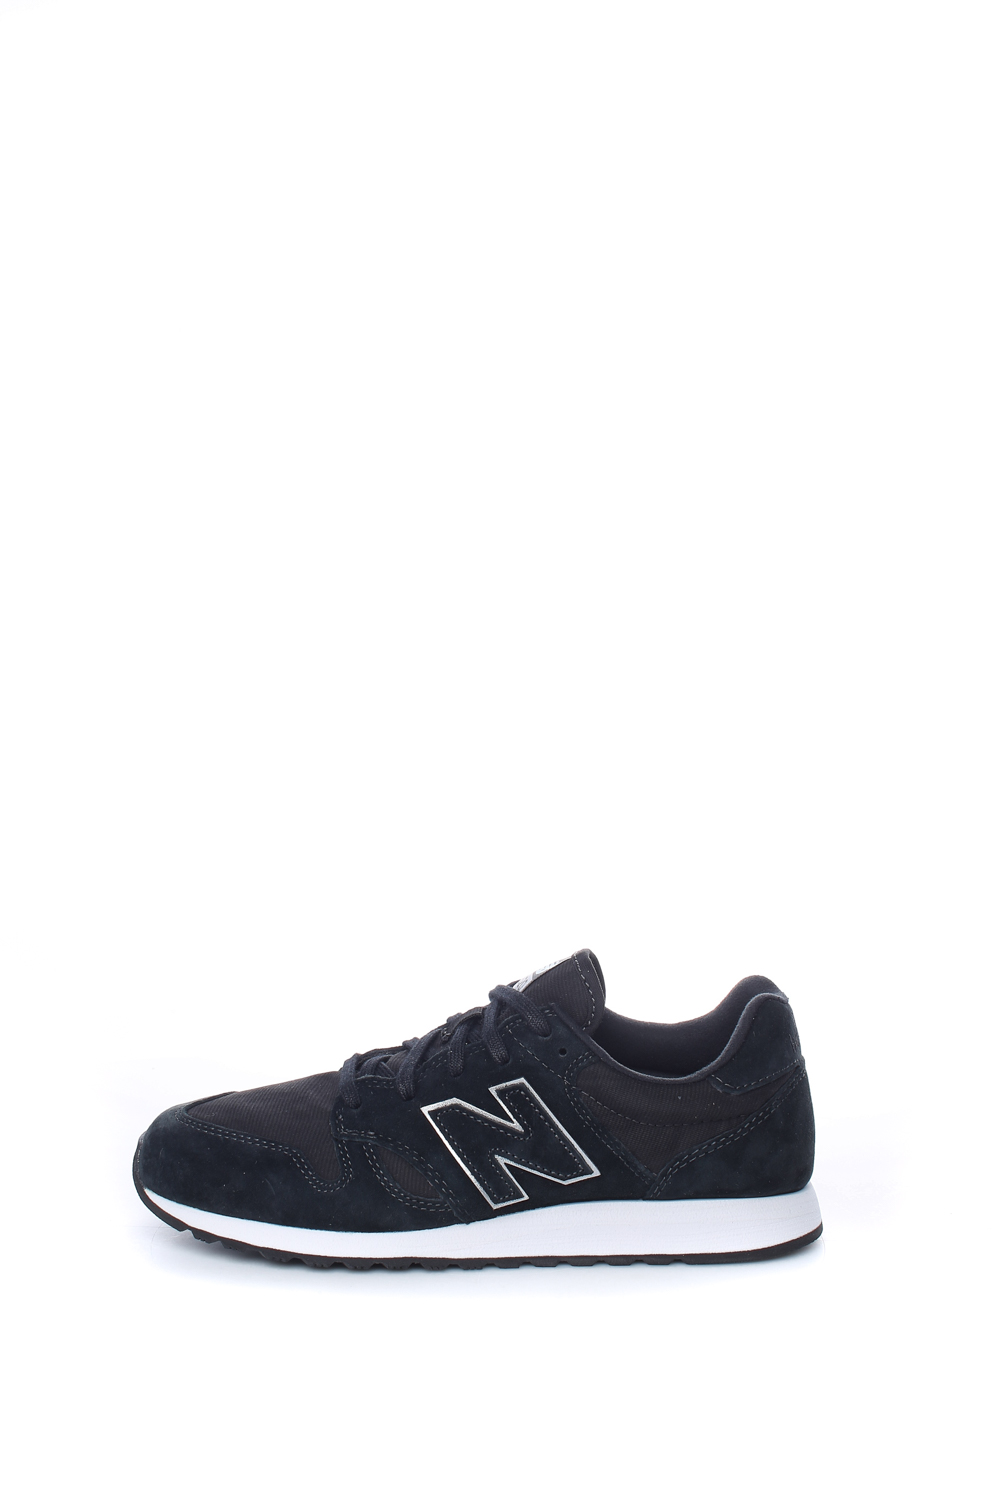 NEW BALANCE - Γυναικεία sneakers New Balance 520 μαύρα Γυναικεία/Παπούτσια/Sneakers